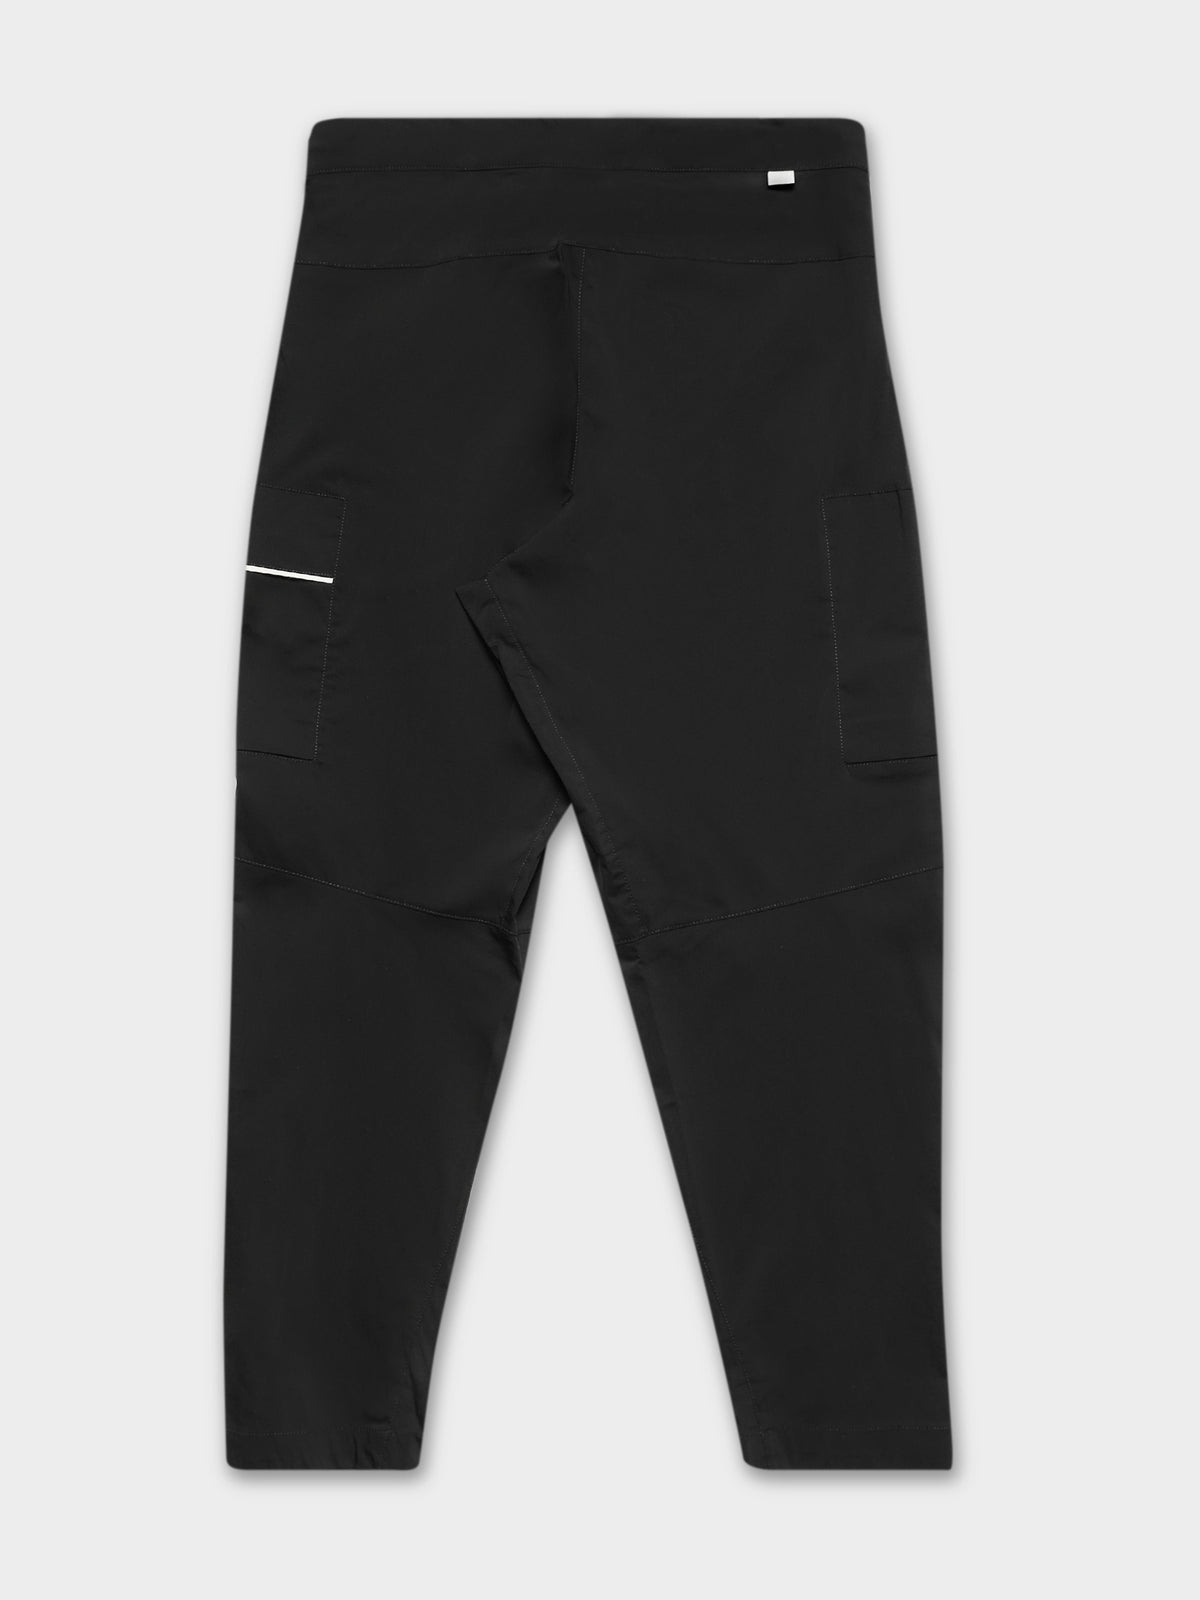 Sportswear Style Essentials Woven Unlined Utility Pants in Black